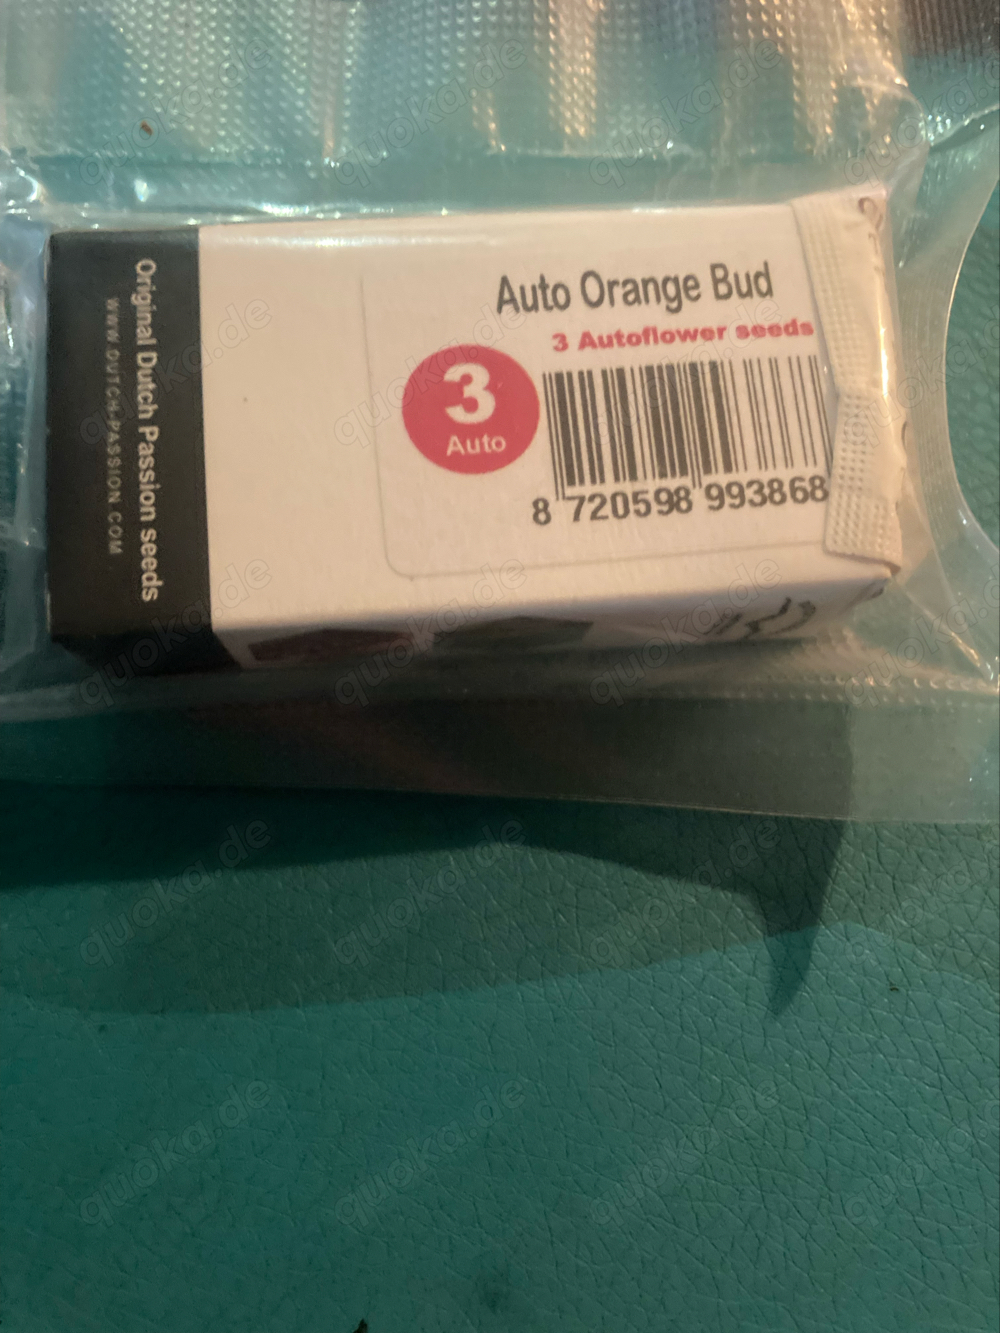 Grow Seeds Auto Orange Bud